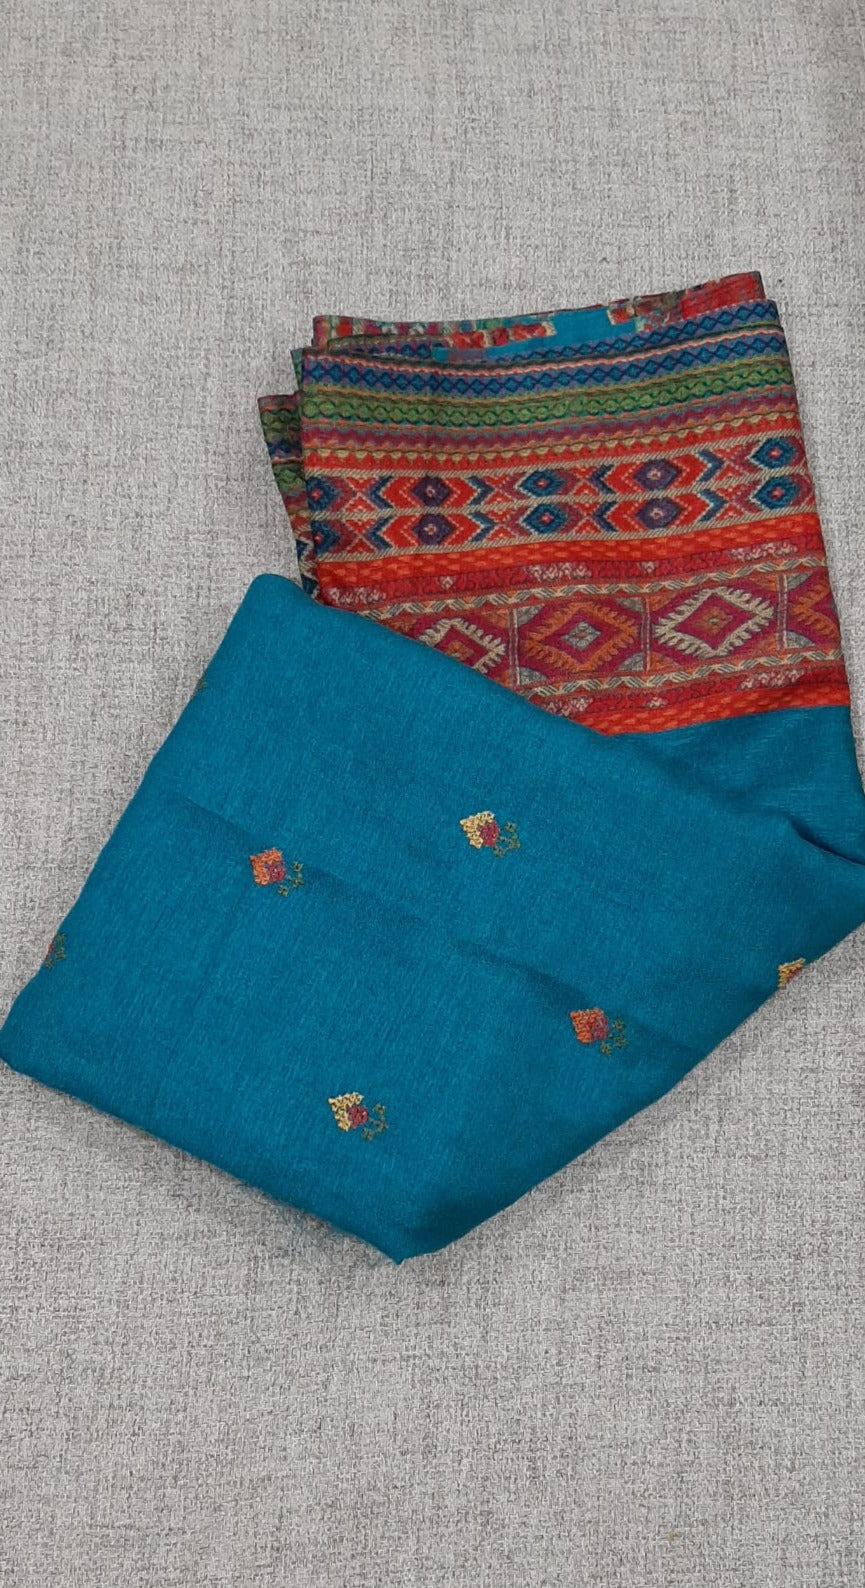 Blue Sari with Red Border @ DressingStylesCA.com